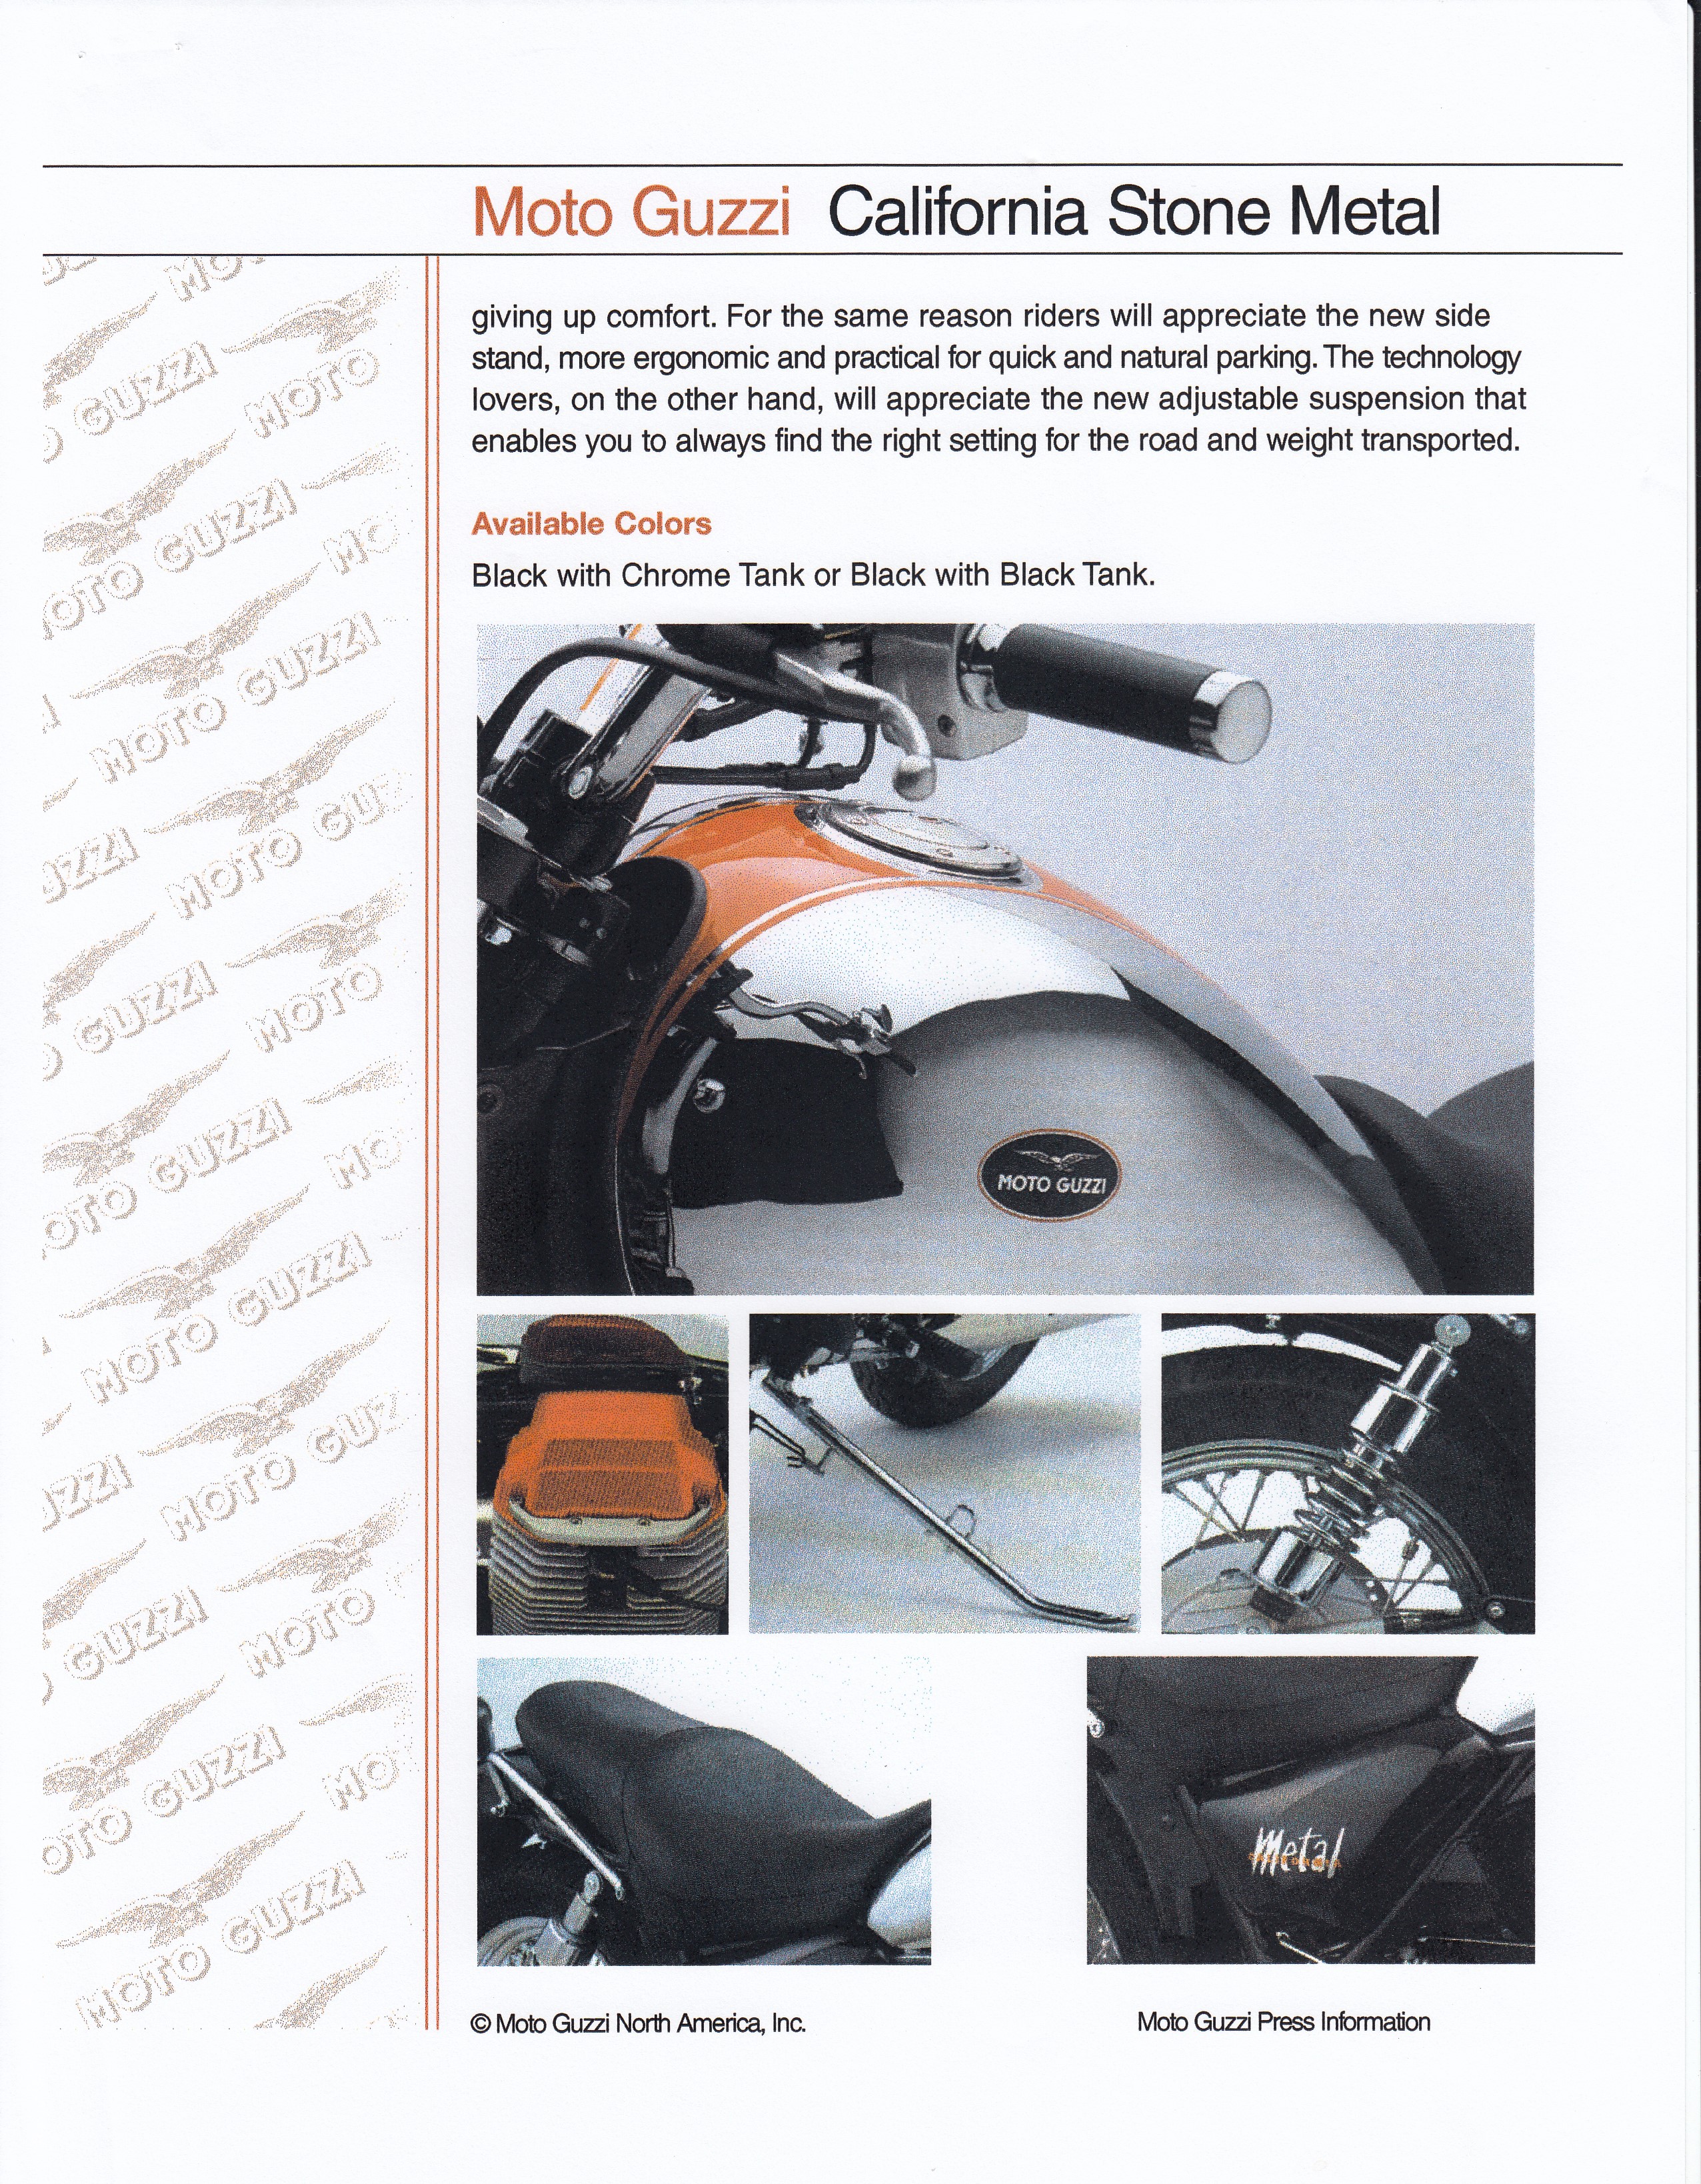 Press release - Moto Guzzi press information 2002